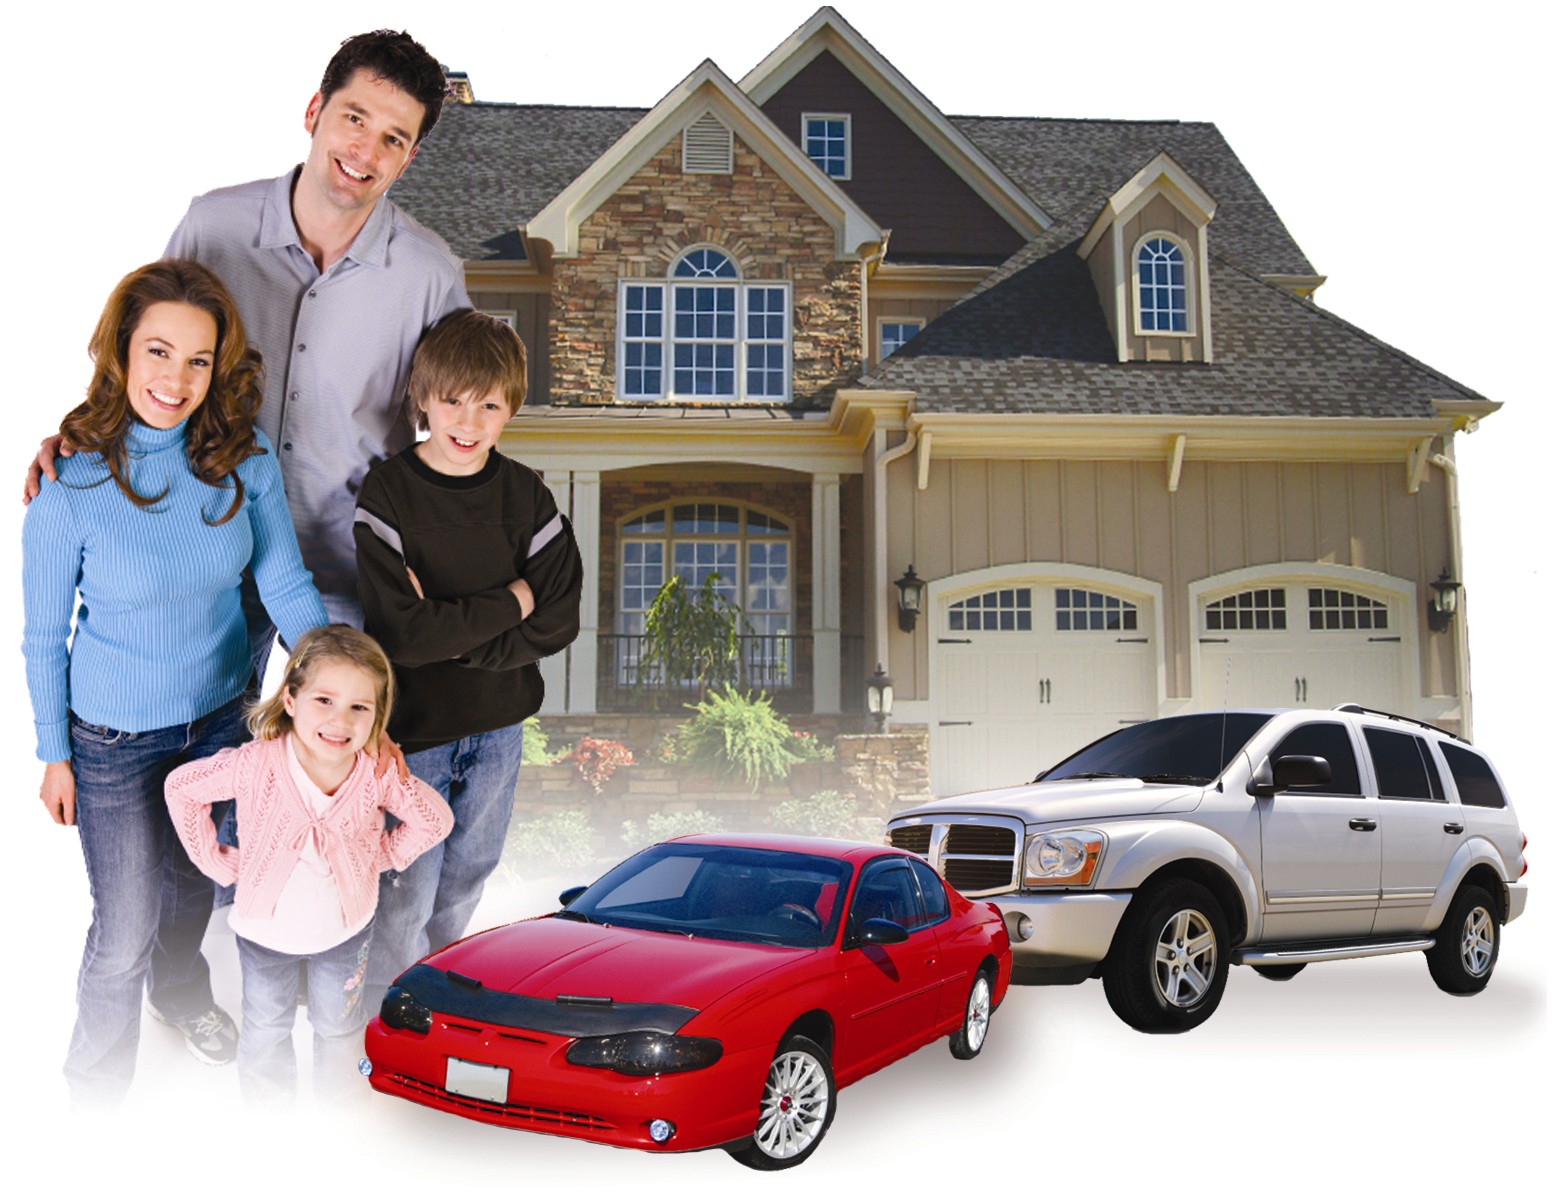 Auto Home Insurance Quotes Online. QuotesGram